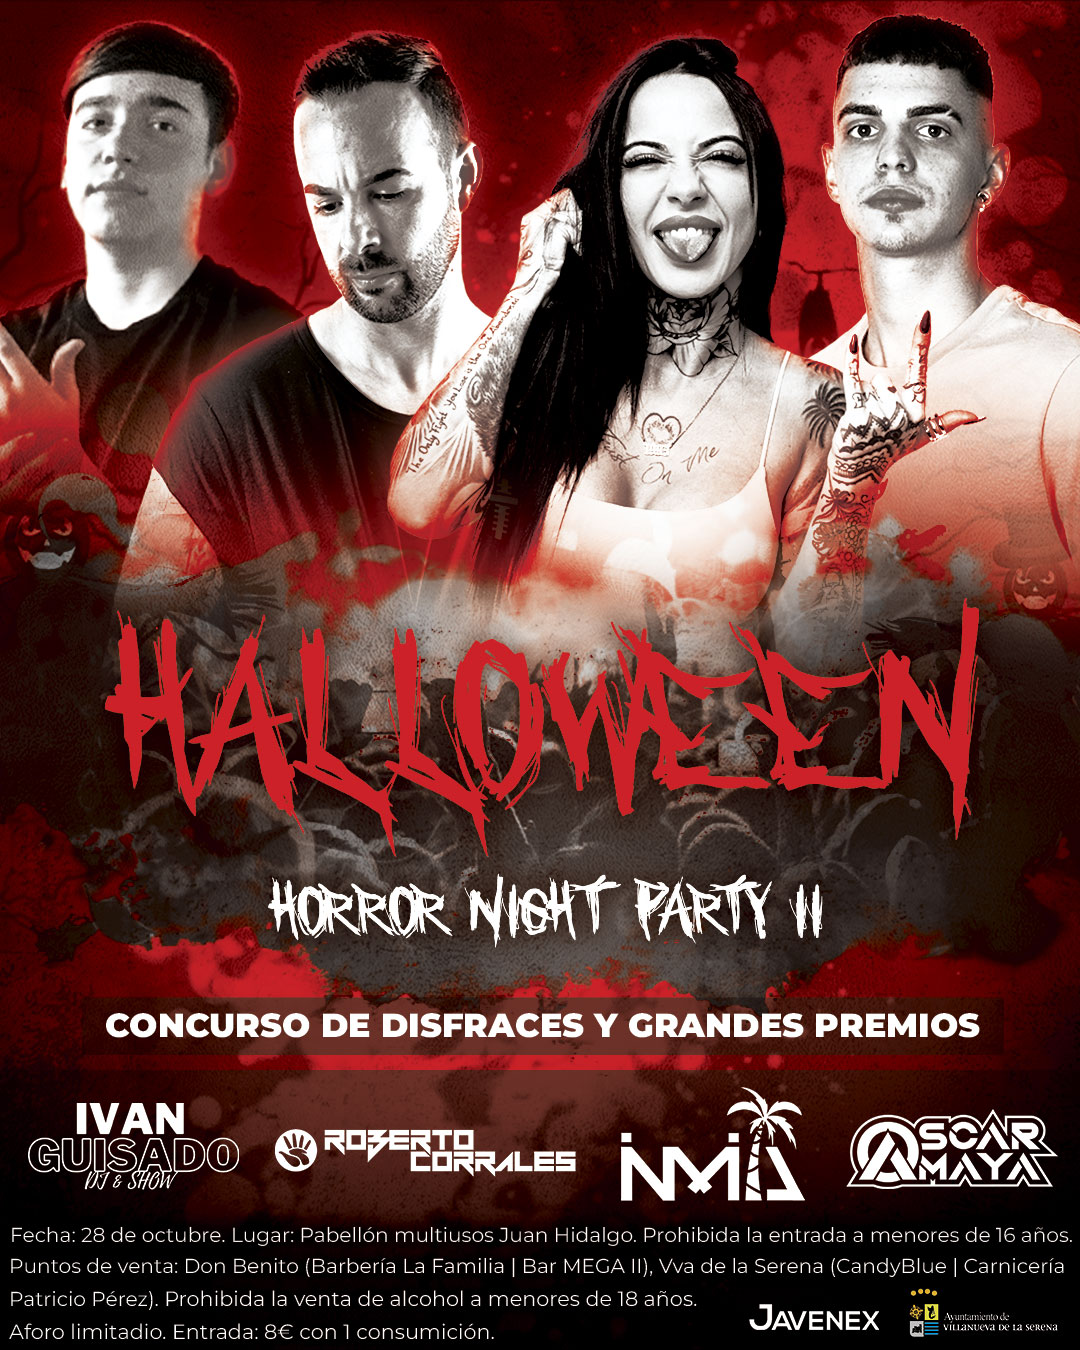 Festival “Halloween horror night party”